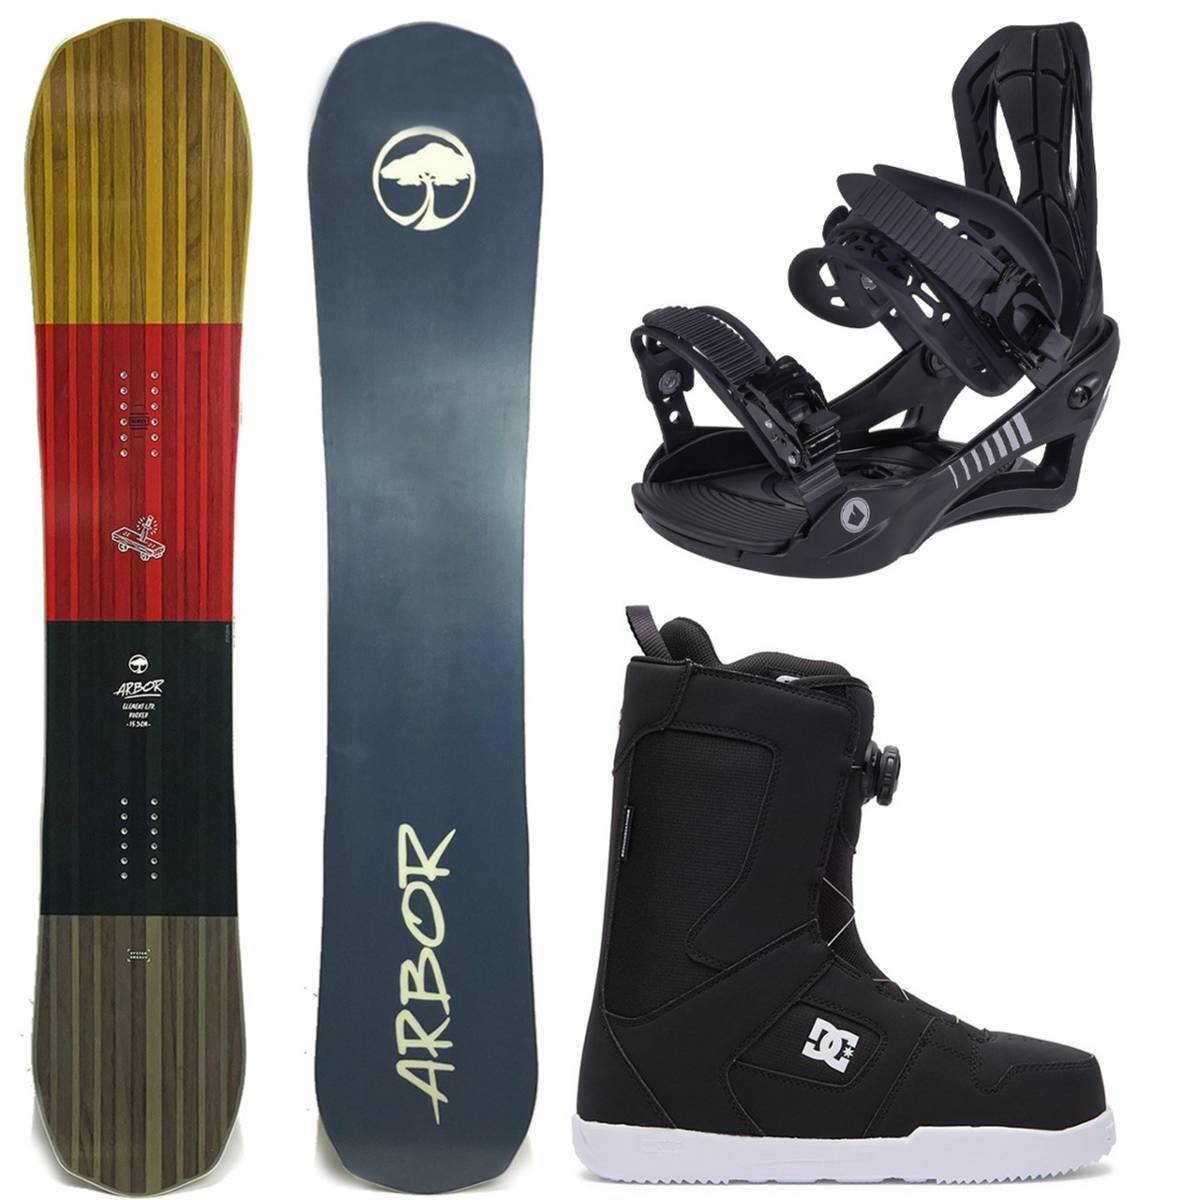 Arbor snowboard package